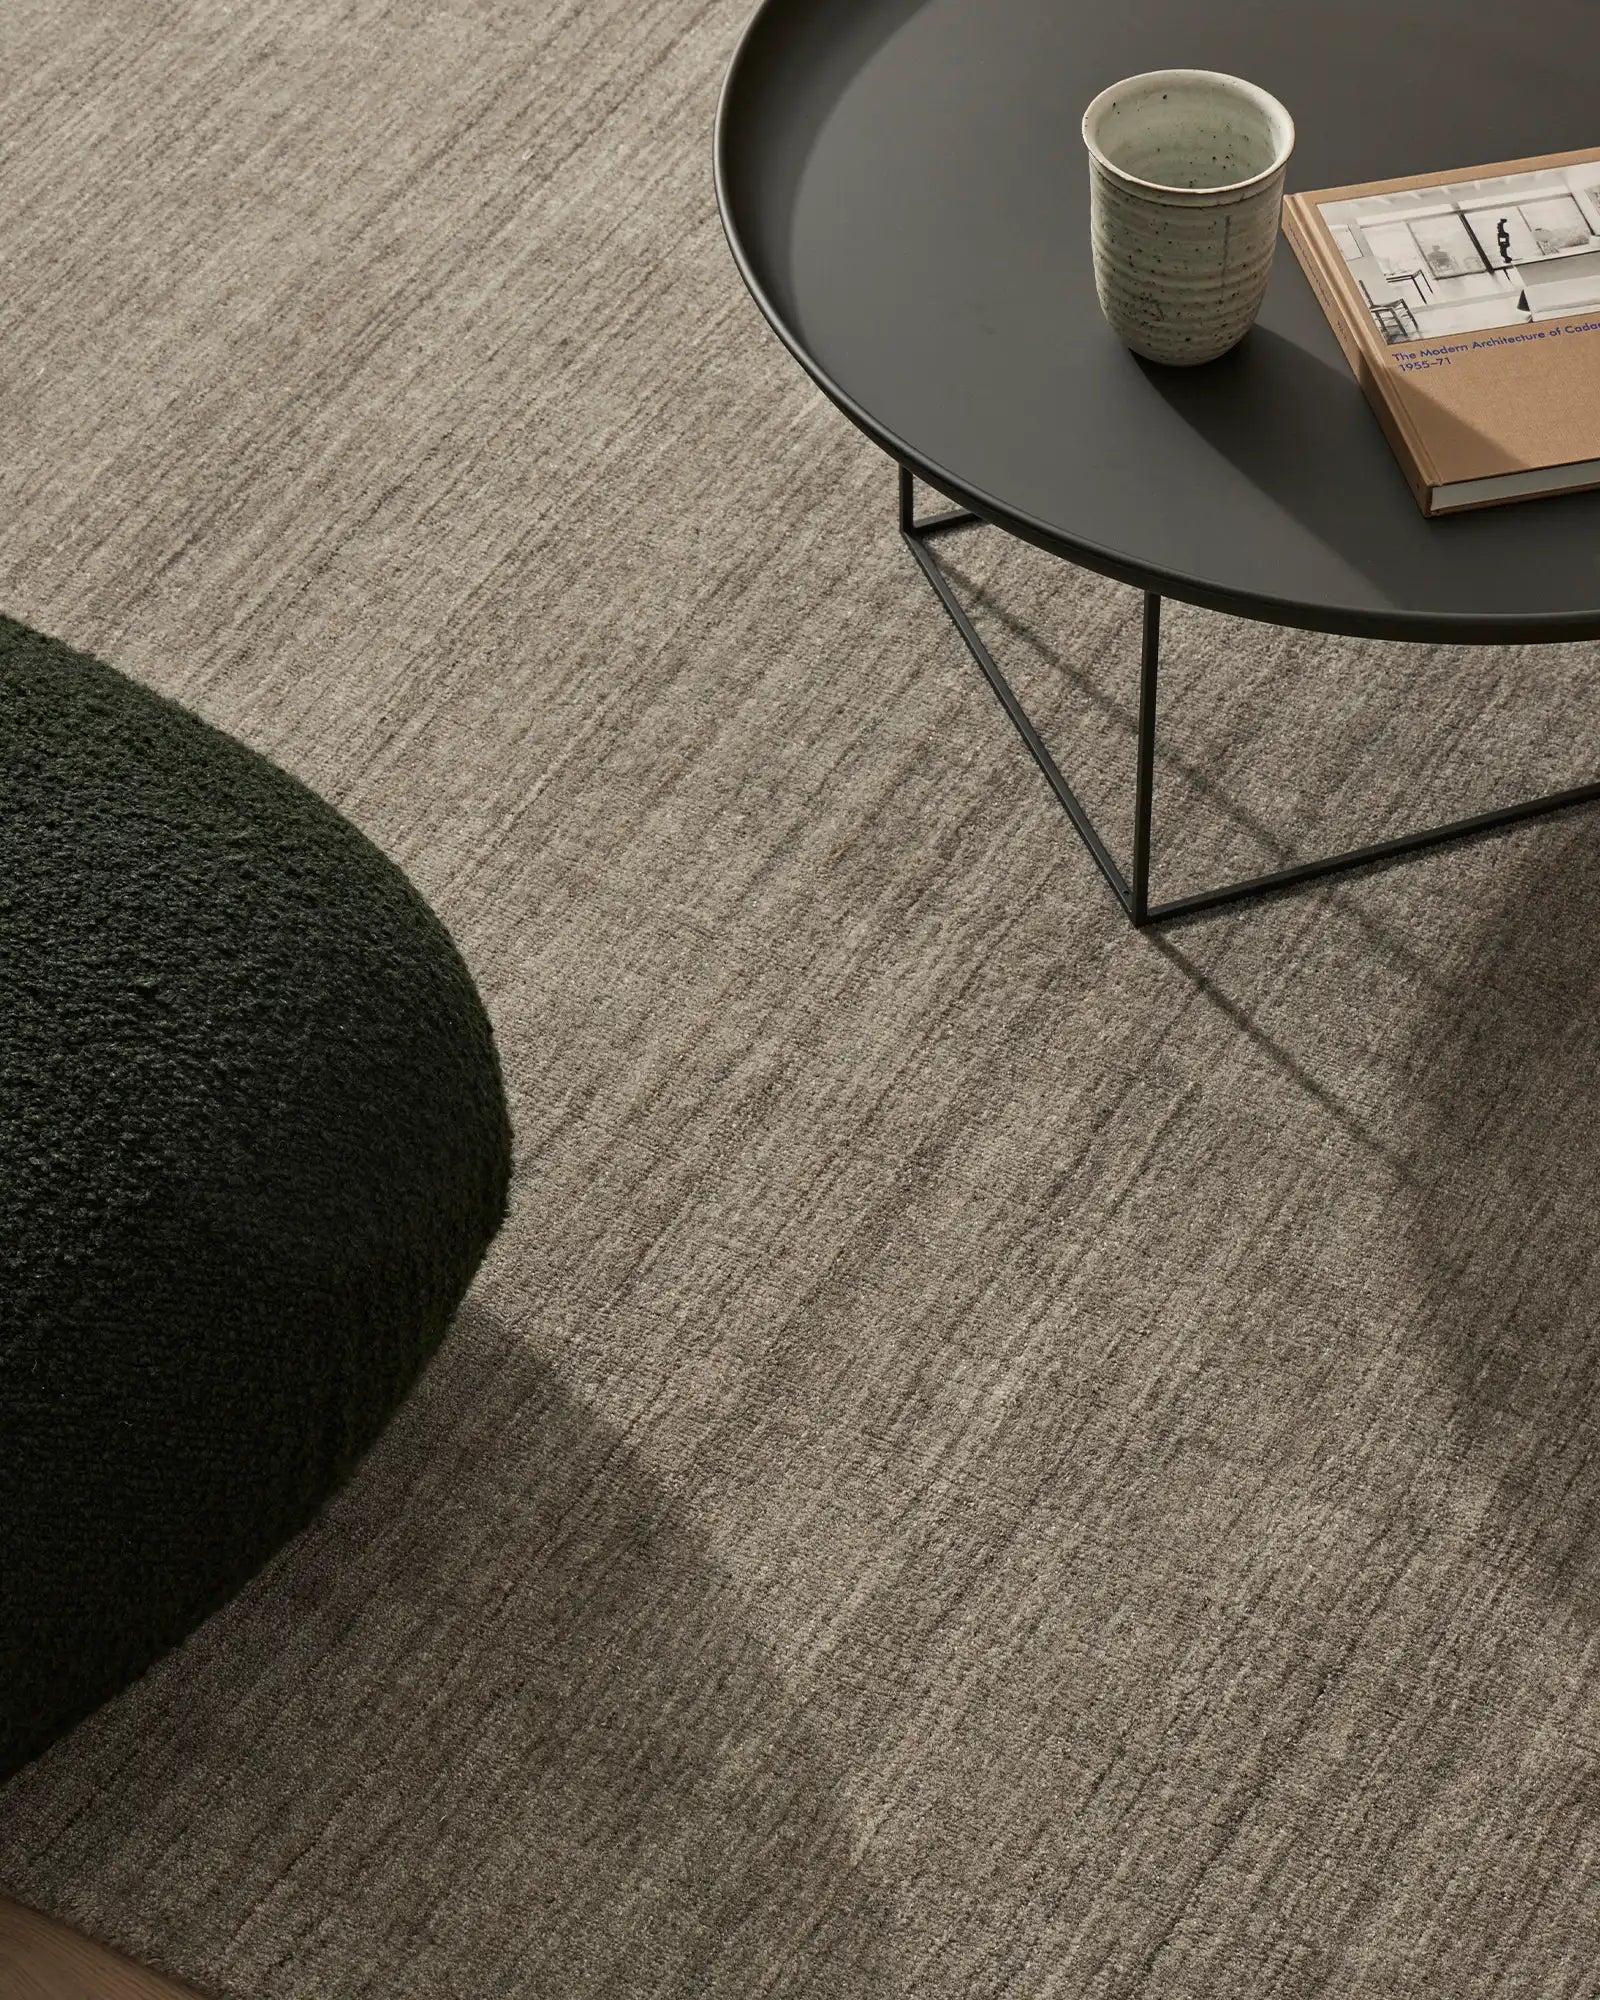 Weave Gippsland Floor Rug - Stone RGP01STON